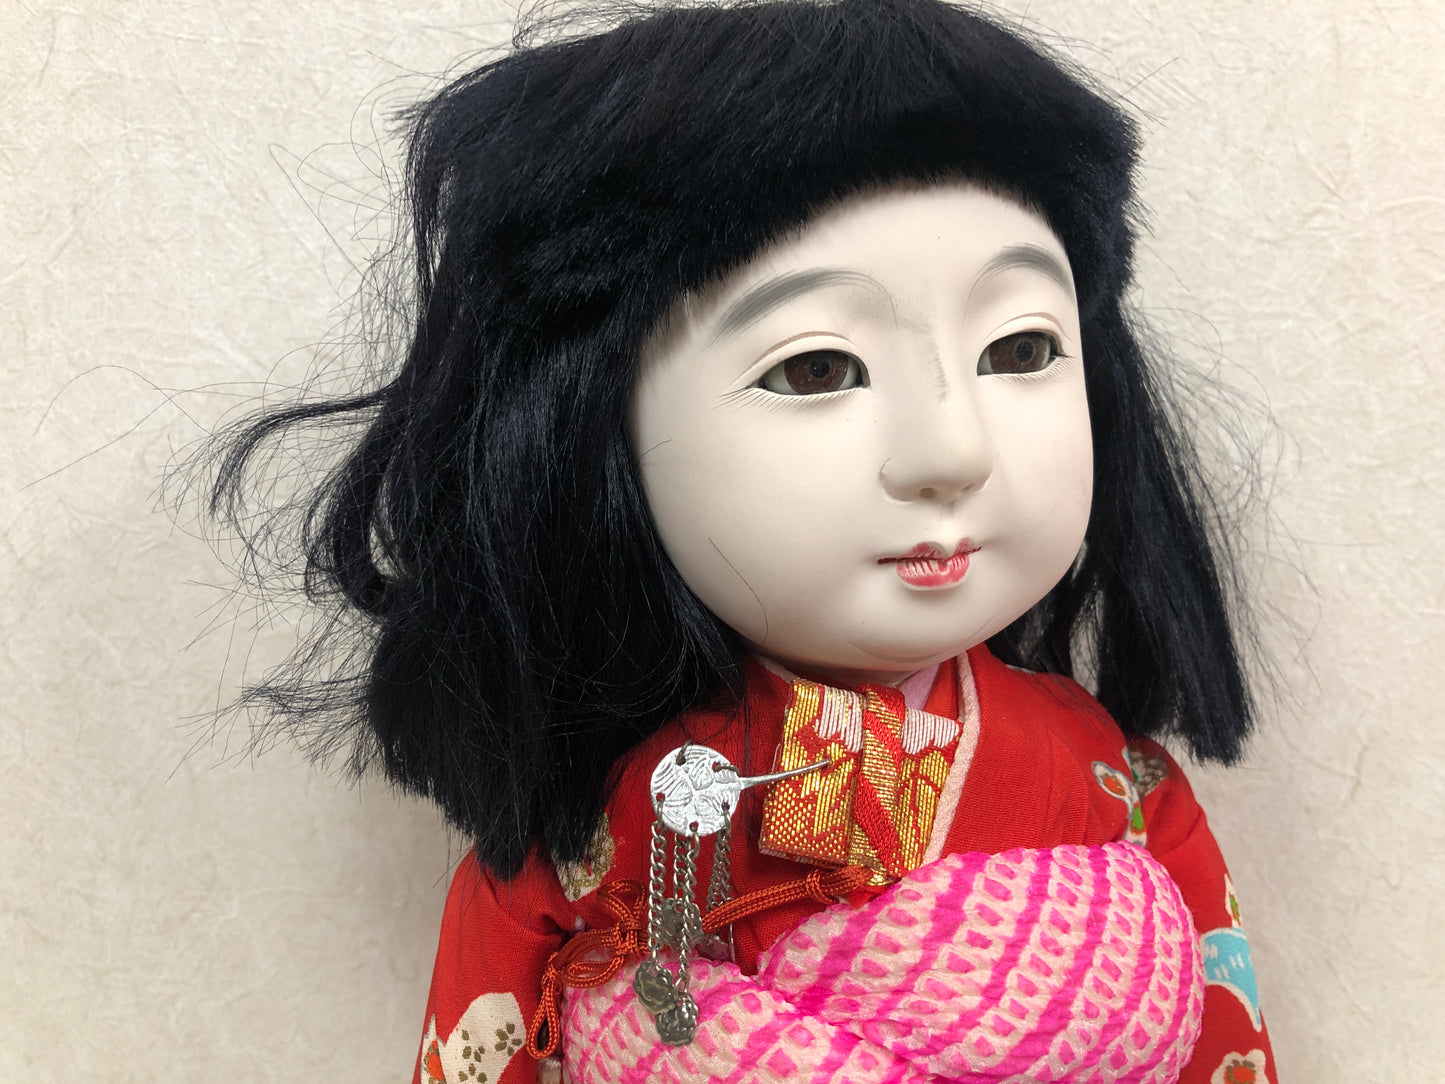 Y3952 NINGYO Ichimatsu Doll girl box Japan vintage figure antique interior decor